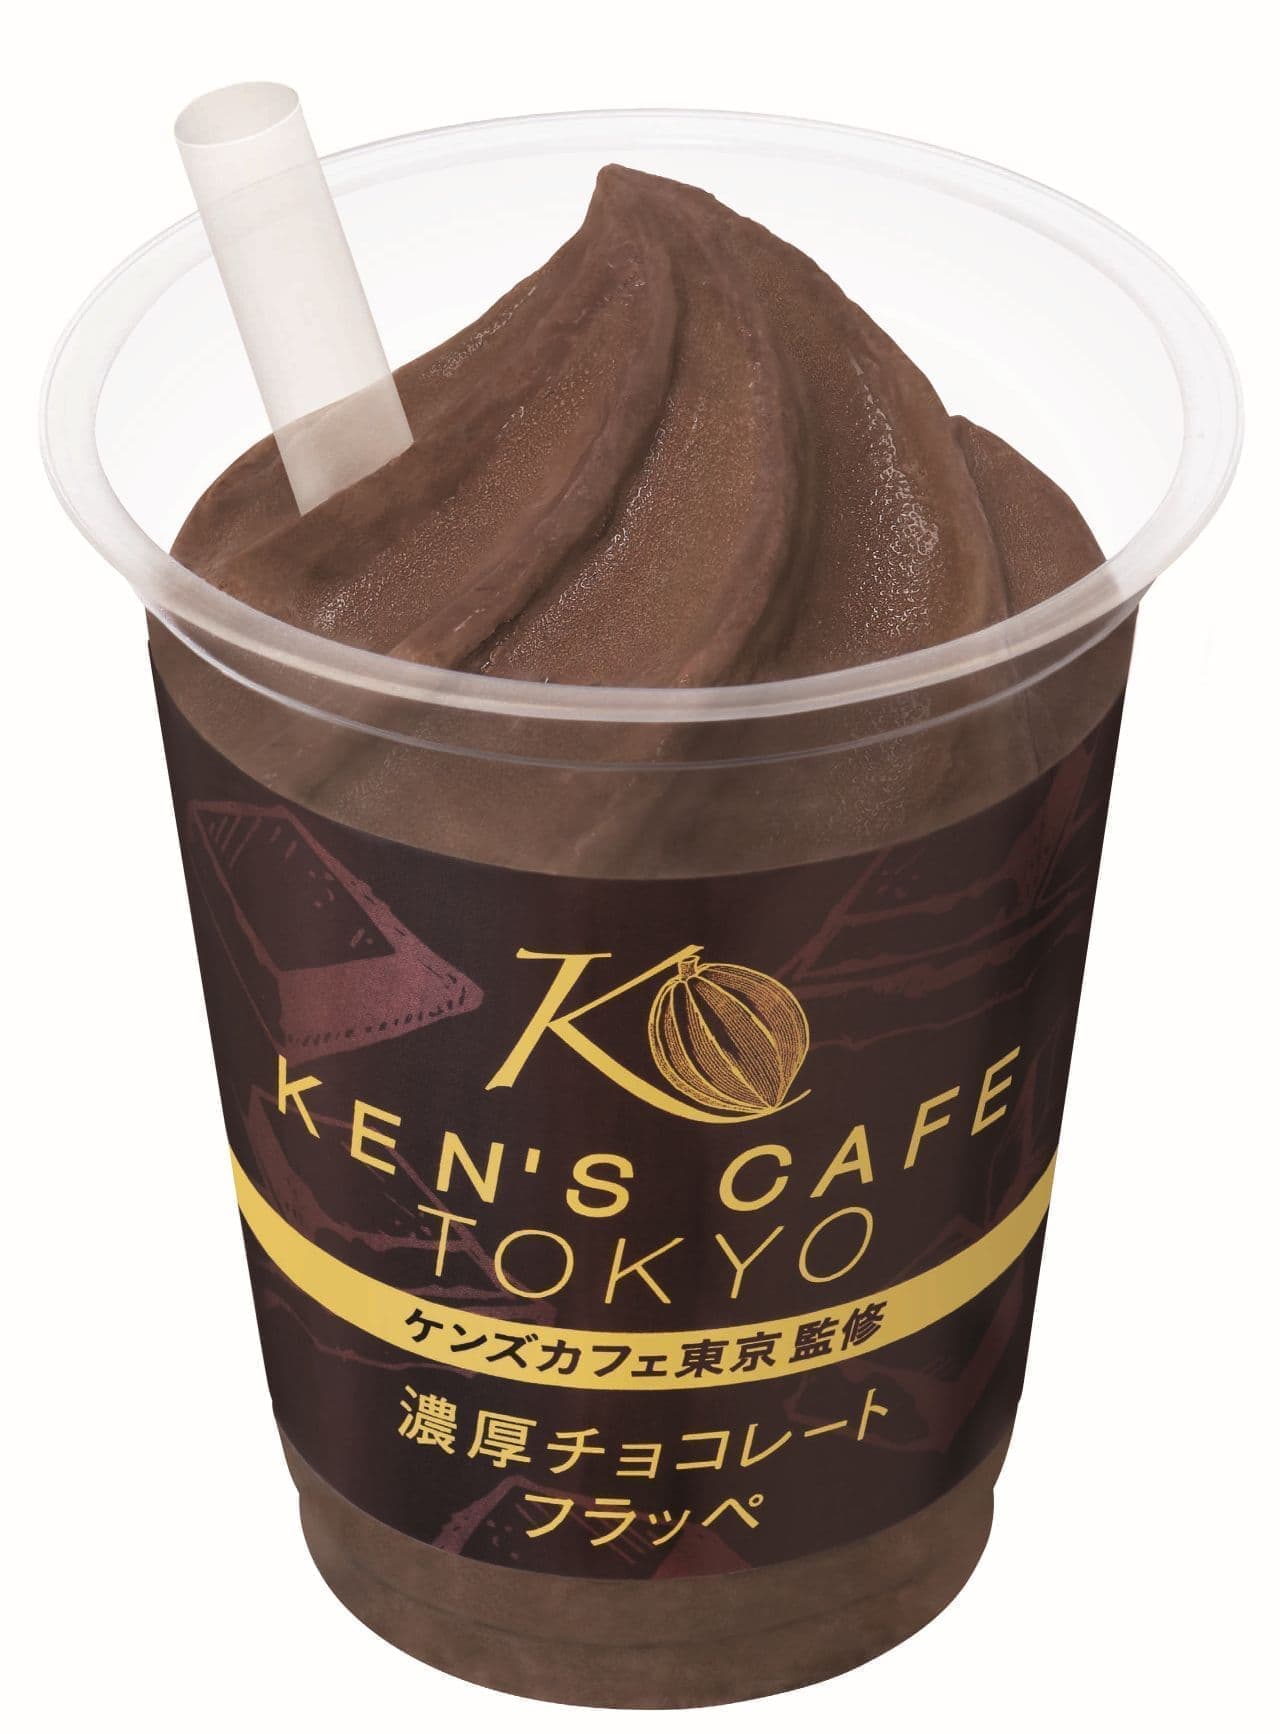 FamilyMart "Kens Cafe Tokyo Supervision Rich Chocolate Frappe"